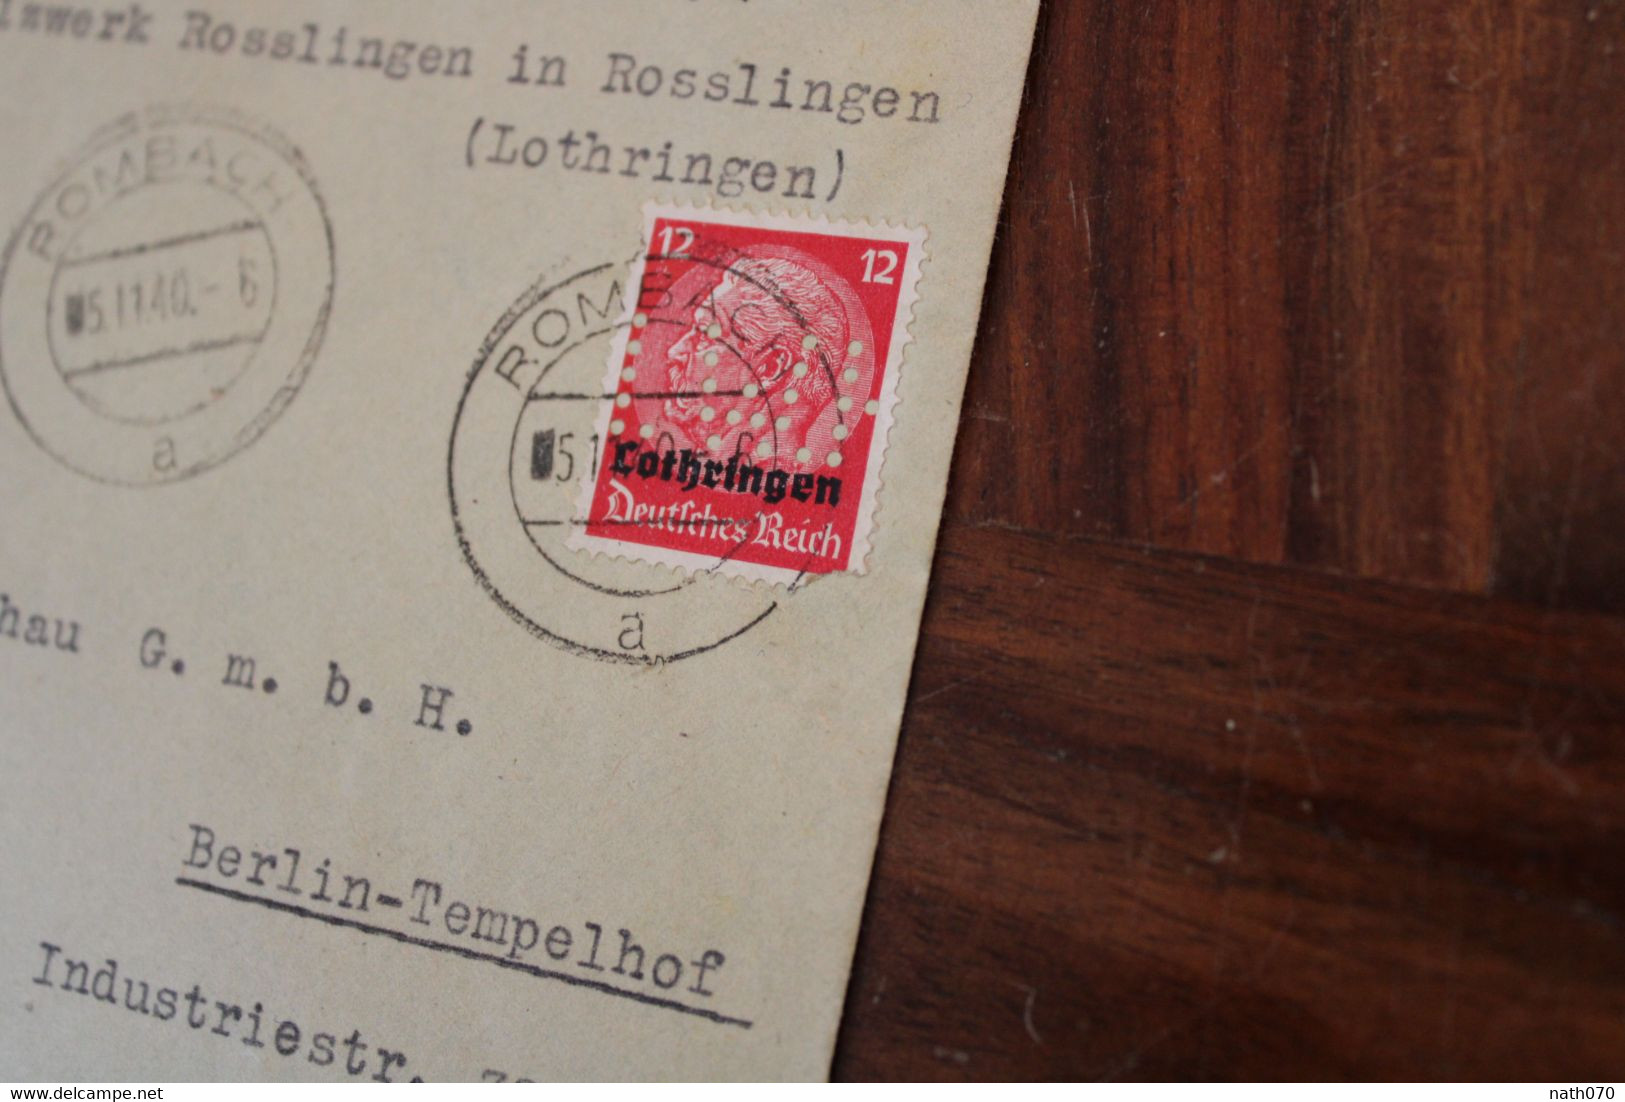 Löthringen 1940 Rosslingen Perfin Stamp Cover Dt Reich Besetzung Occupation Lorraine Timbre Perforé Rosselange Rombach - Briefe U. Dokumente